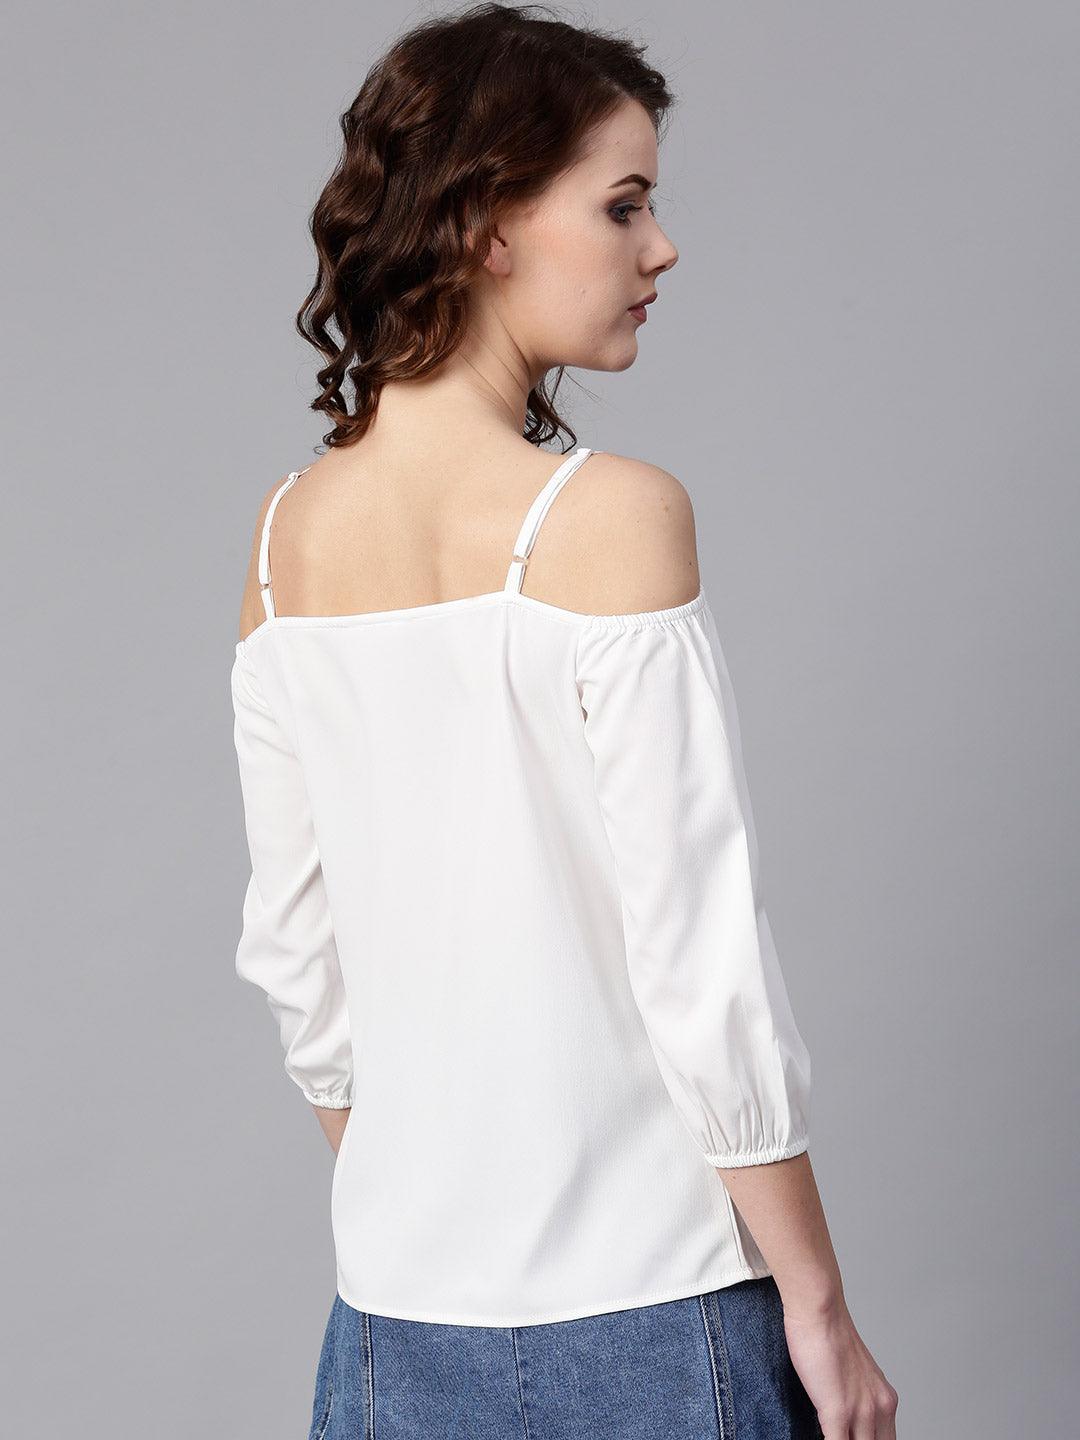 White Embellished Cold-Shoulder Top - Znxclothing